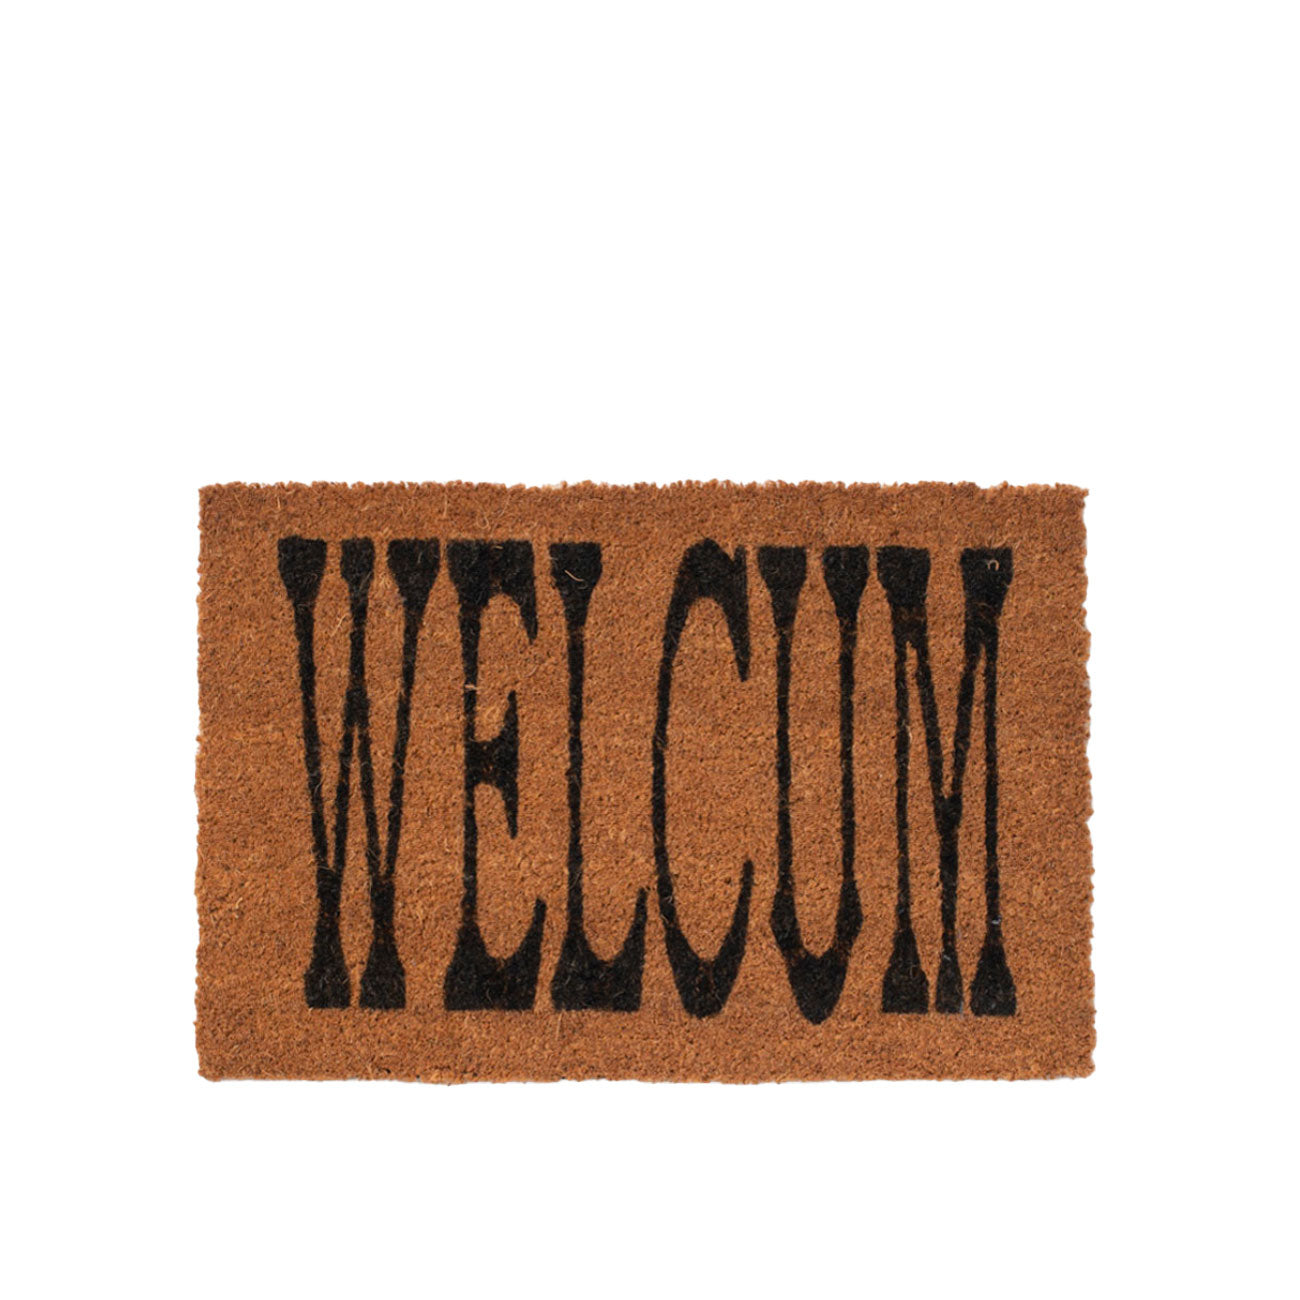 Carne Bollente Welcum Home Doormat (Braun / Schwarz)  - Allike Store